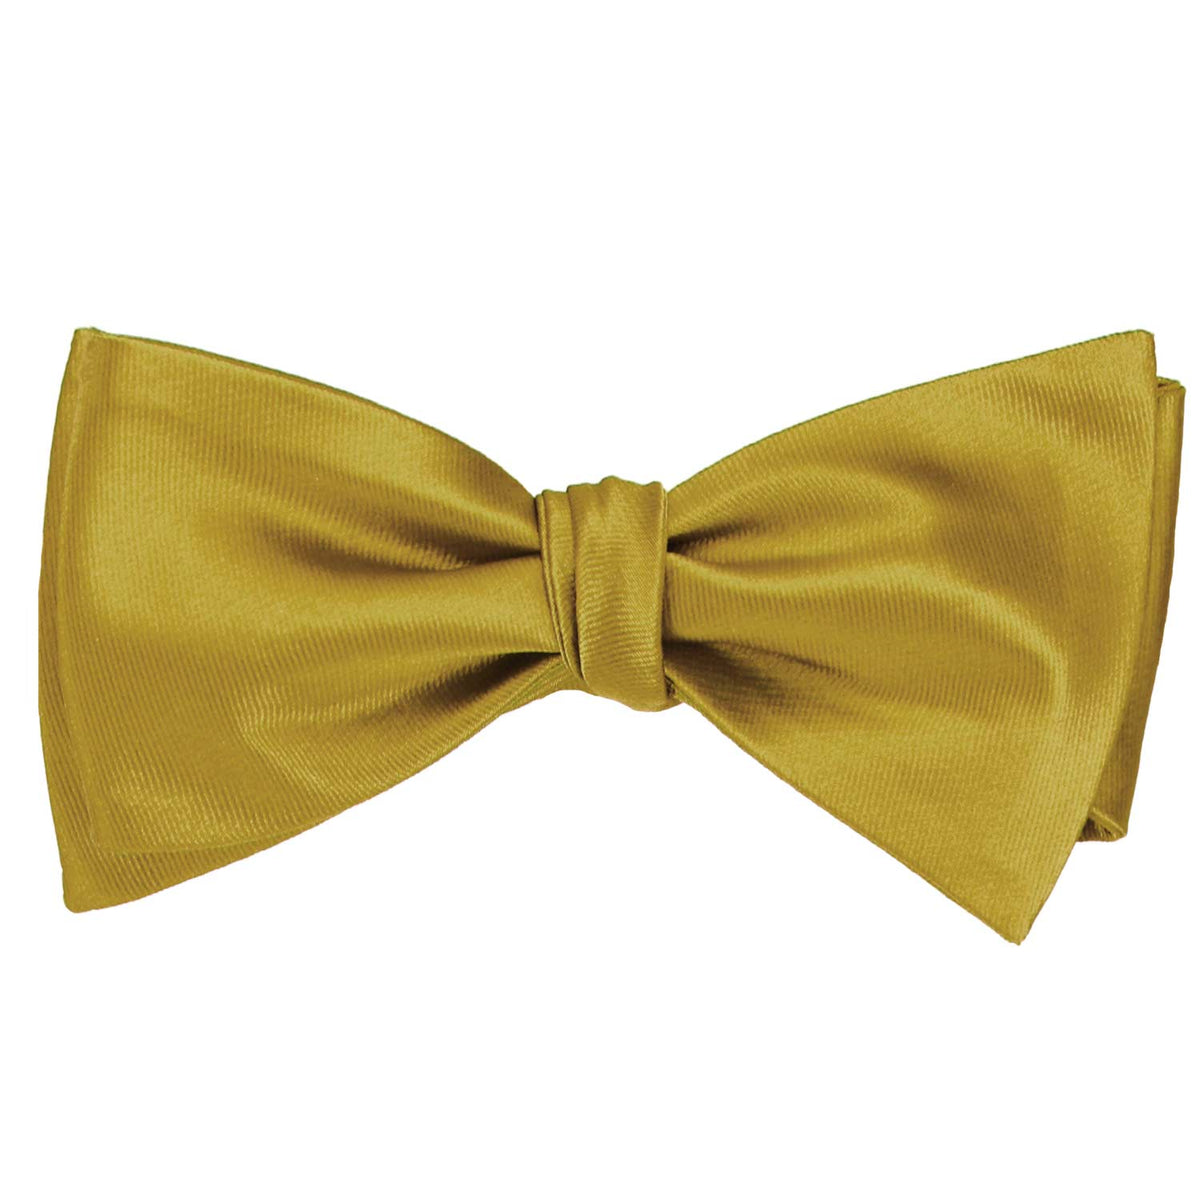 Gold Self Tie Bow Ties Shop At Tiemart Tiemart Inc 8983